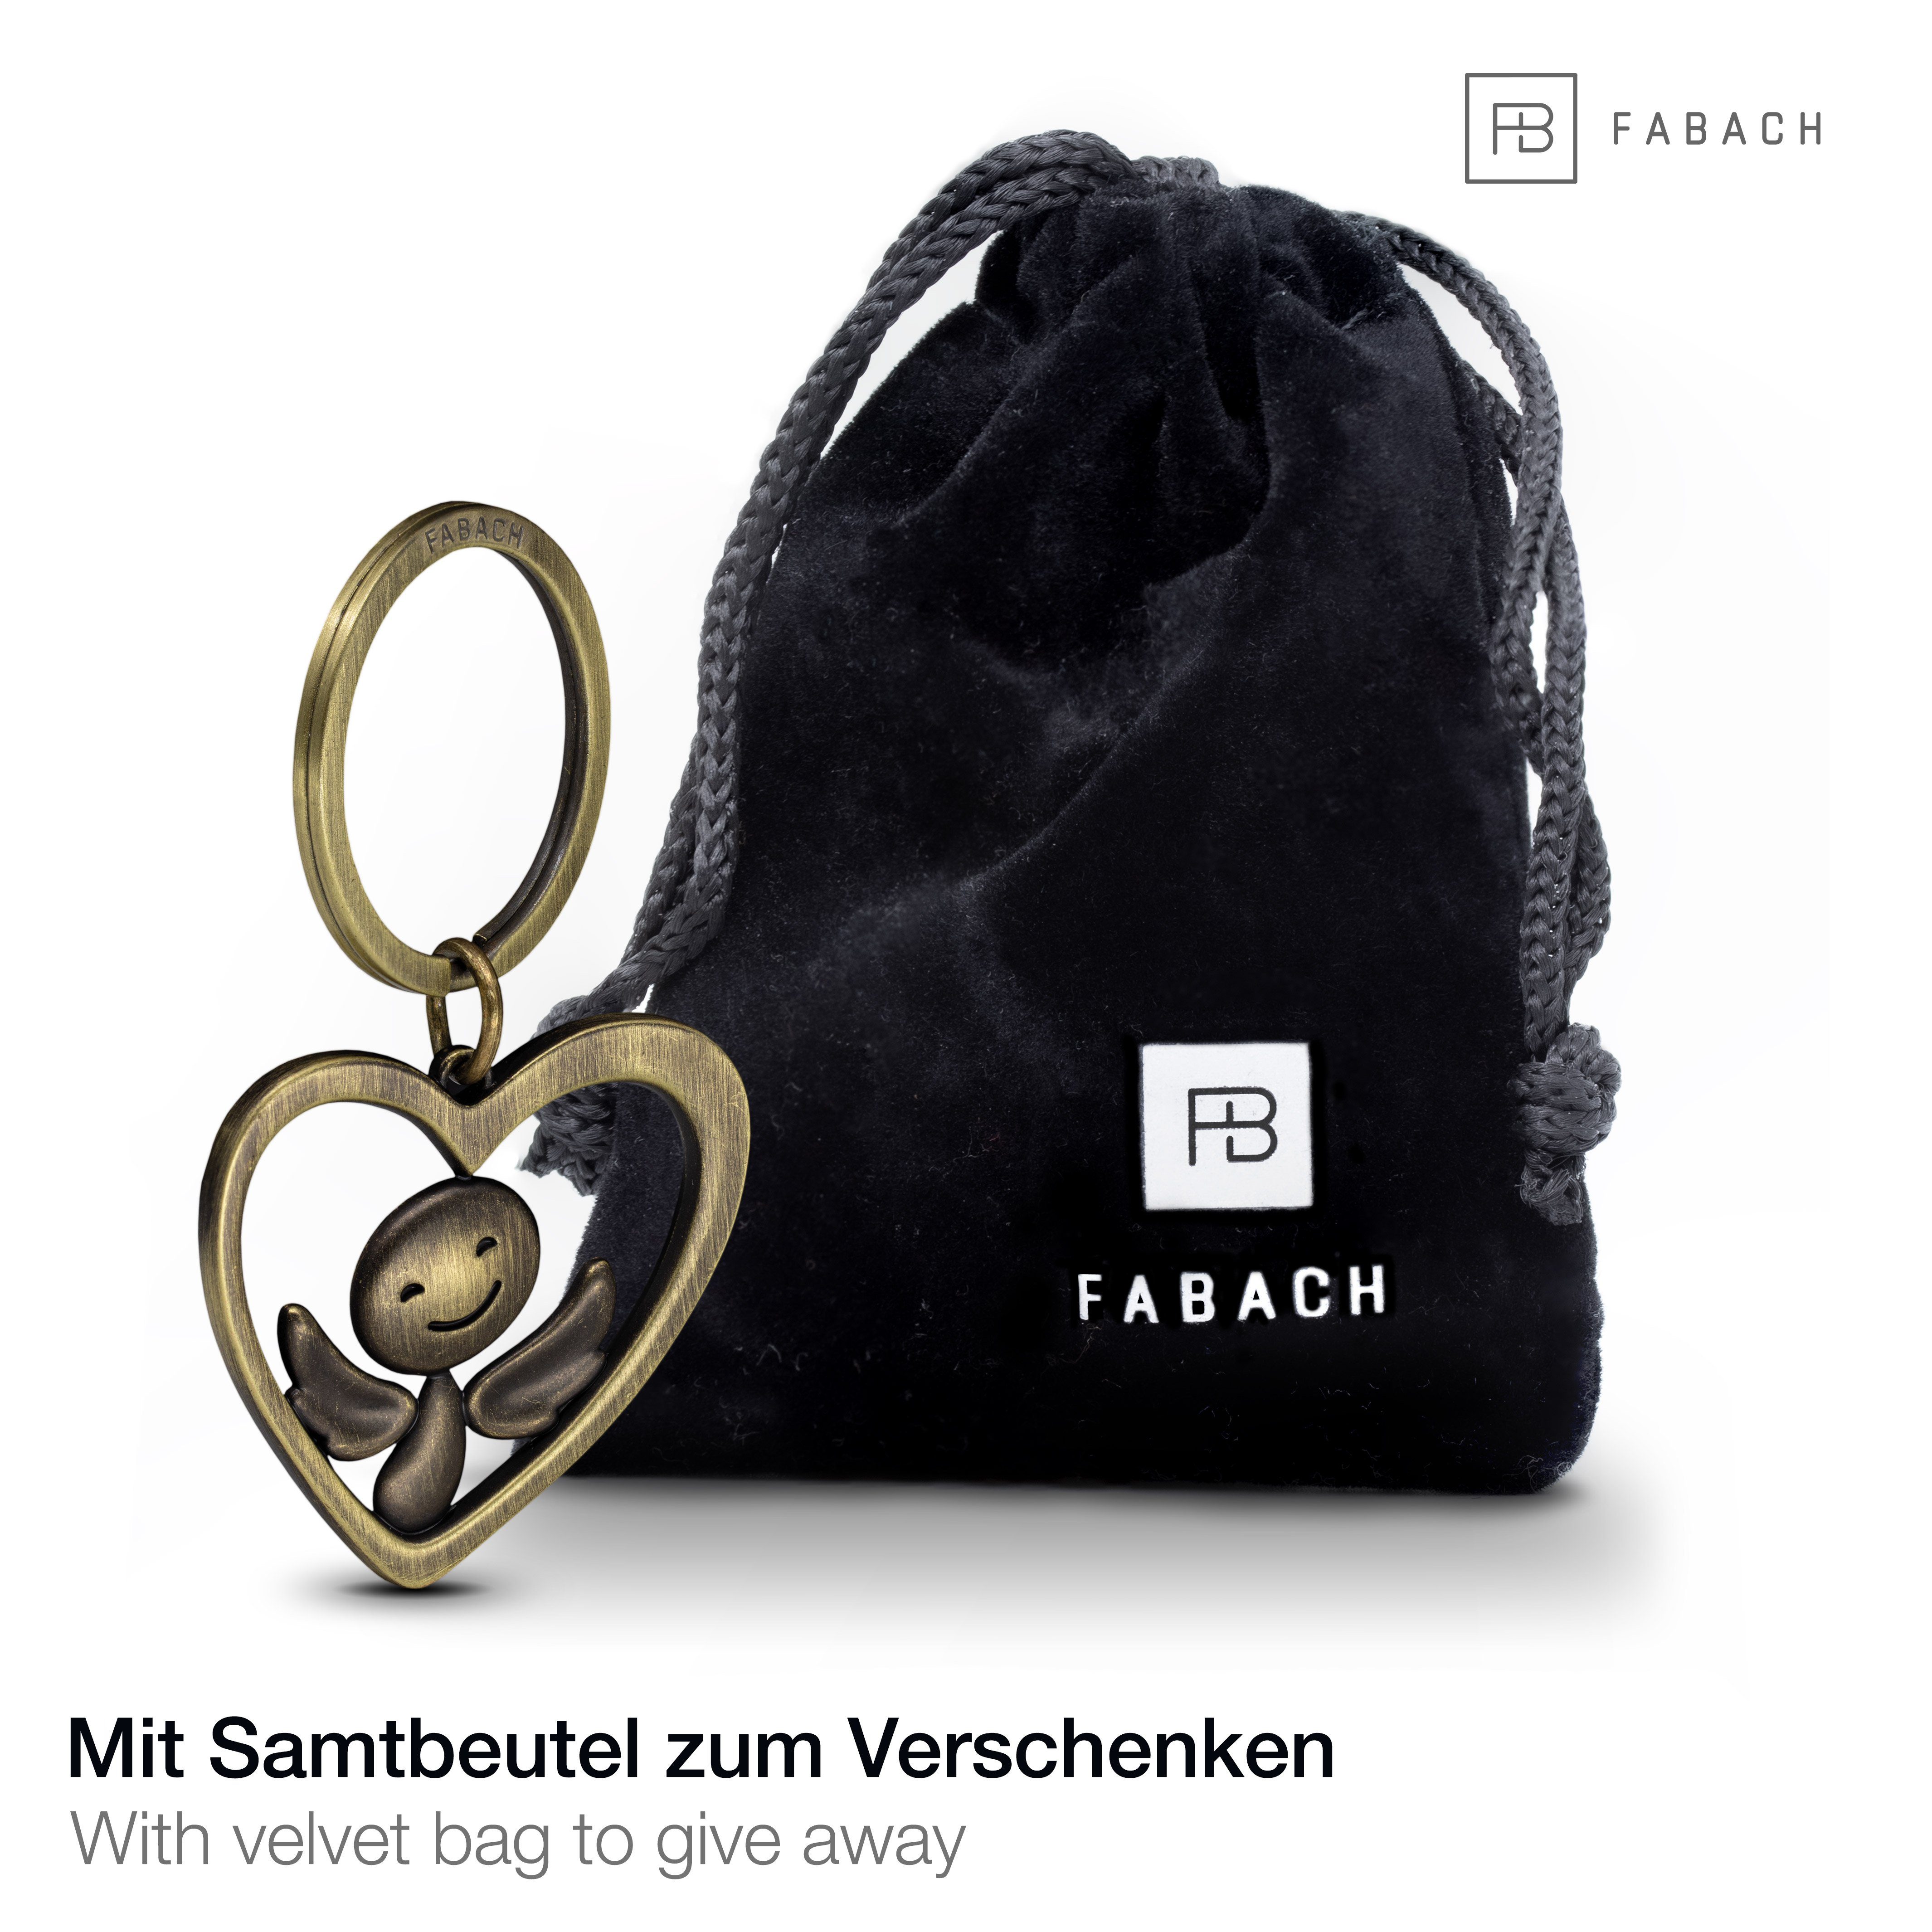 FABACH Schlüsselanhänger Schutzengel Furfur im - Metall Anhänger Glücksbringer Antique Herz - Geschenk Bronze